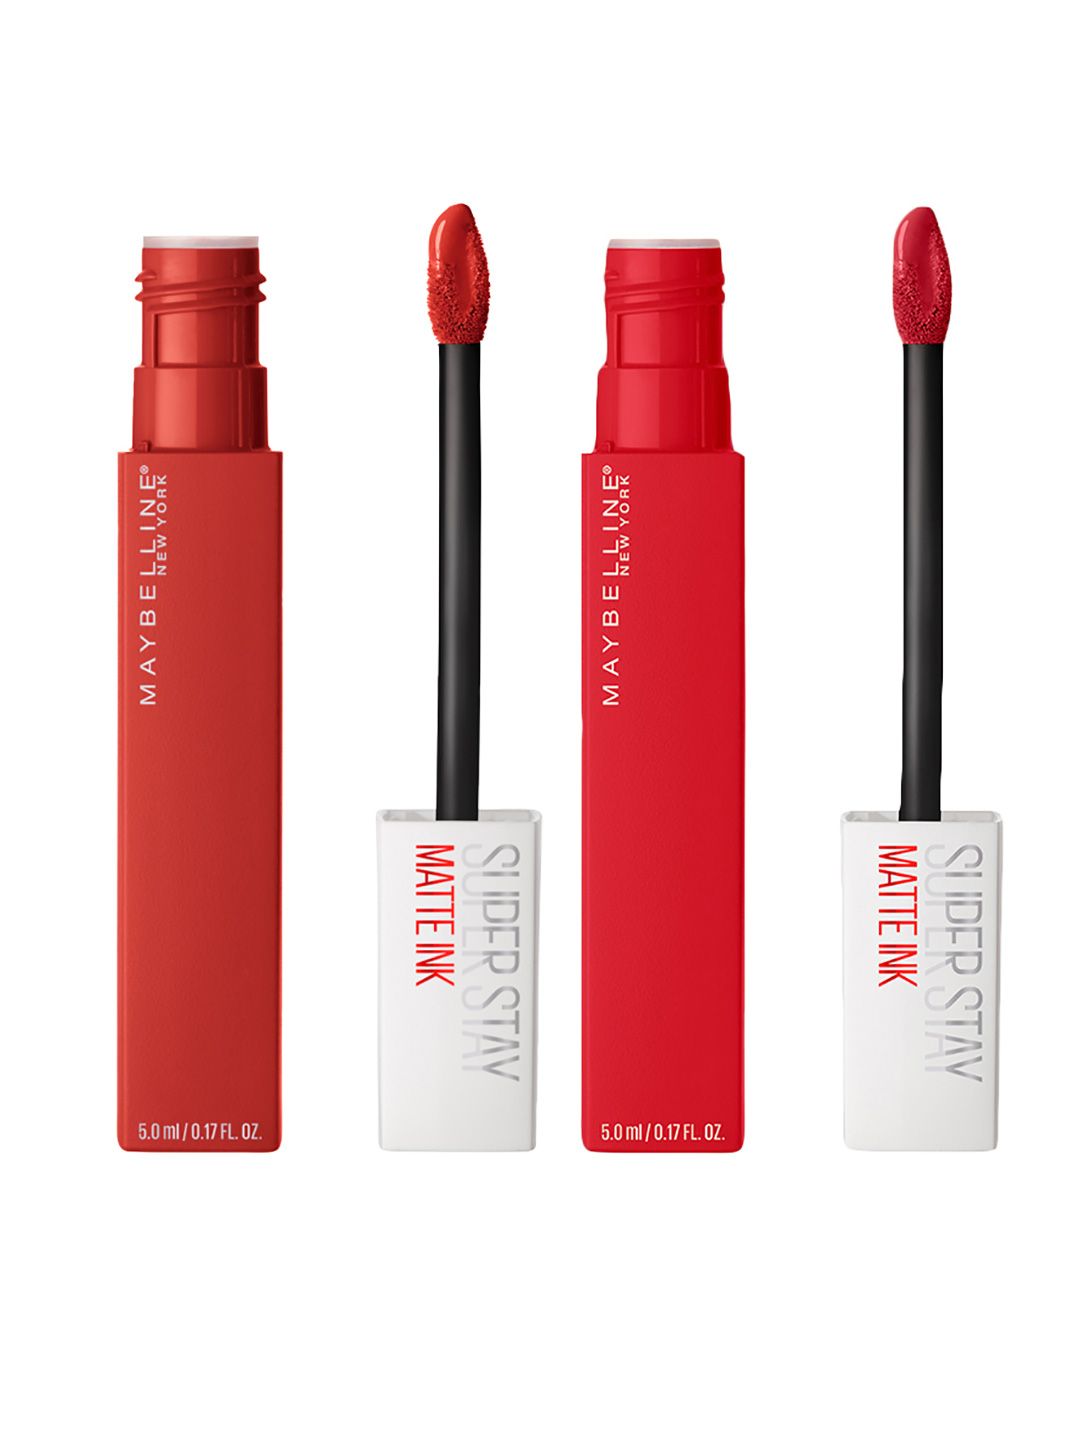 Maybelline Set of 2 New York Super Stay Matte Ink Liquid Lipsticks - Ambitious & Dancer Price in India